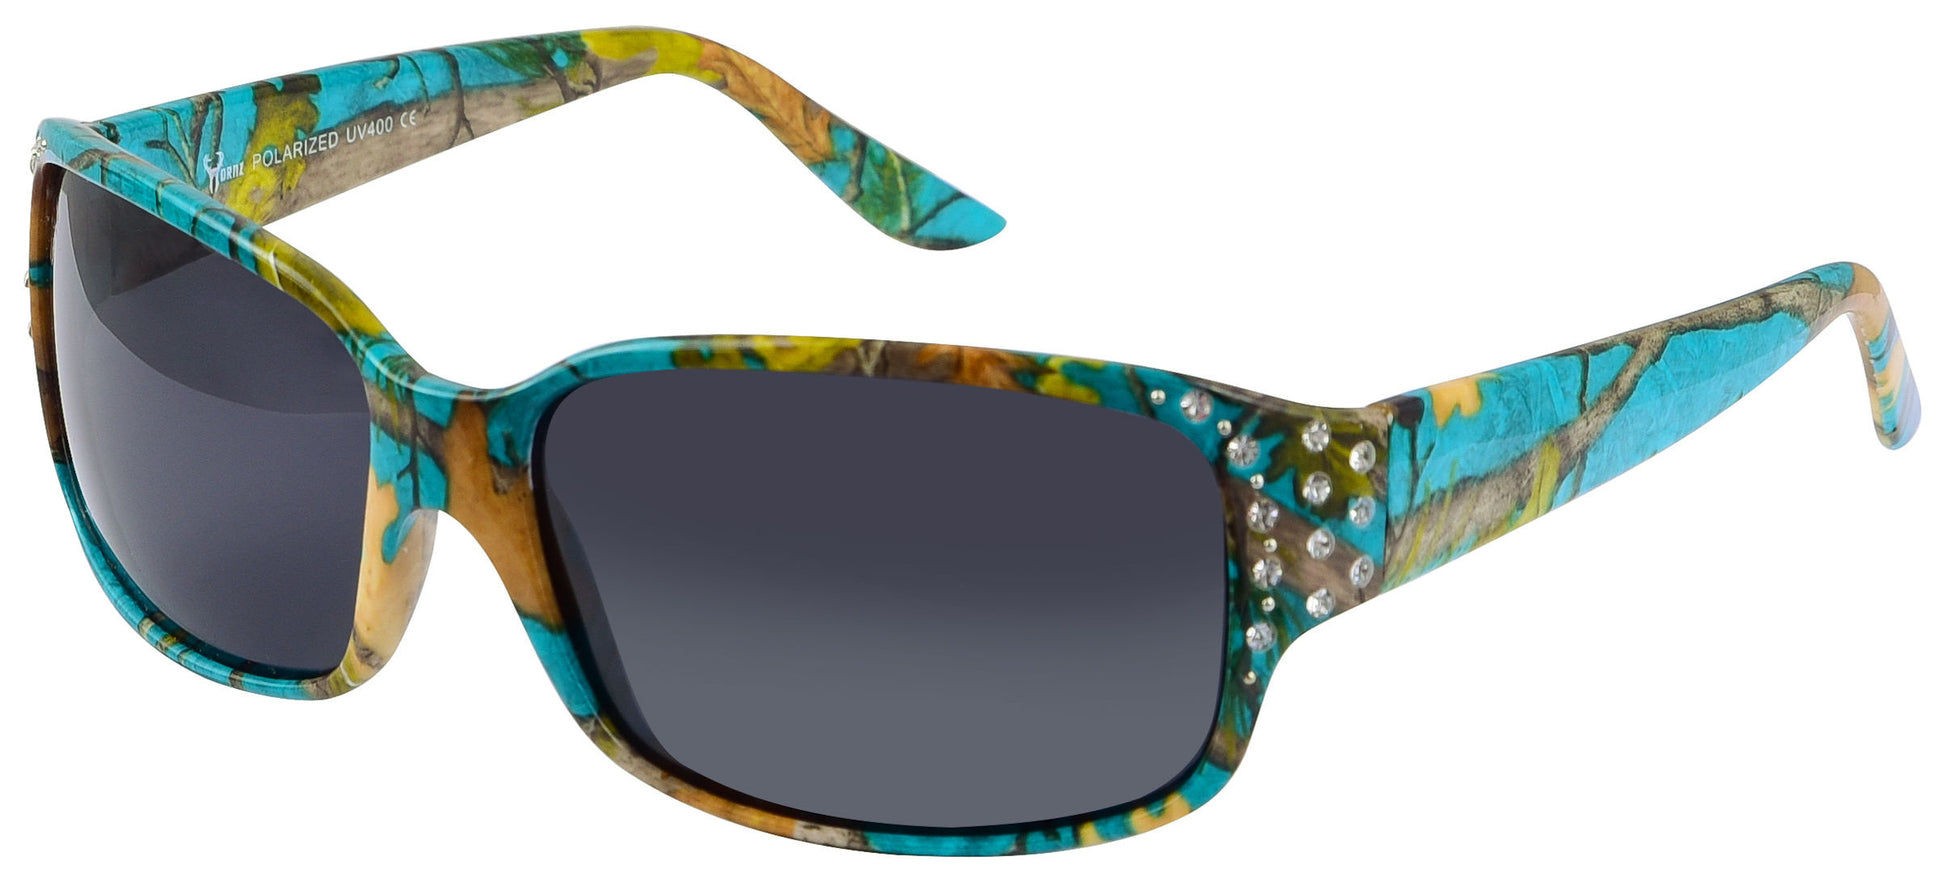 Main image: Polarized Teal Camo Sunglasses for Women - Diamante - Teal Camo Frame - Smoke Lens